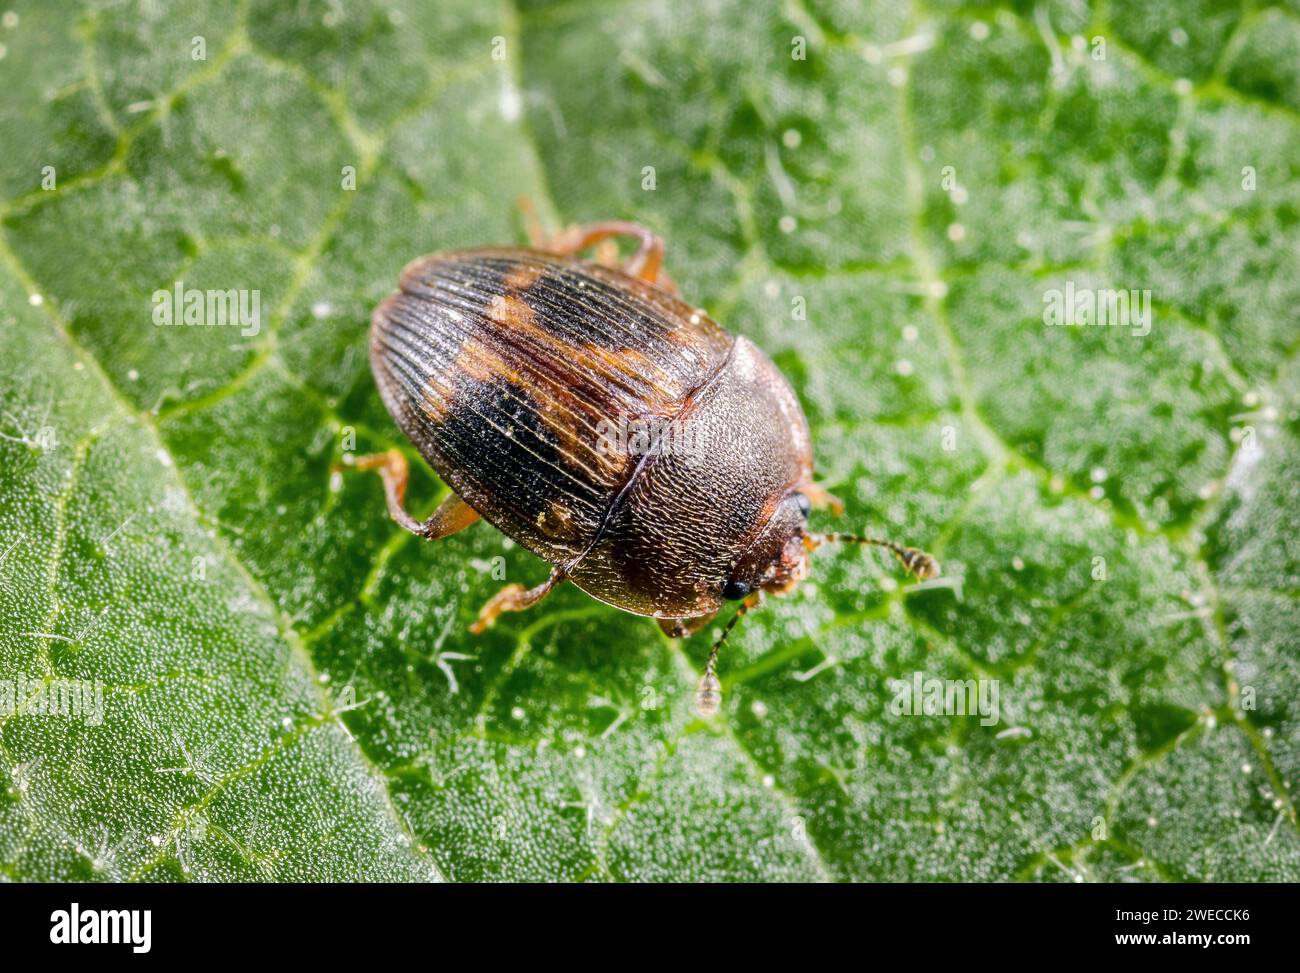 strawberry sap beetle (Stelidota geminata), sitting on a leaf, top view, Germany Stock Photo